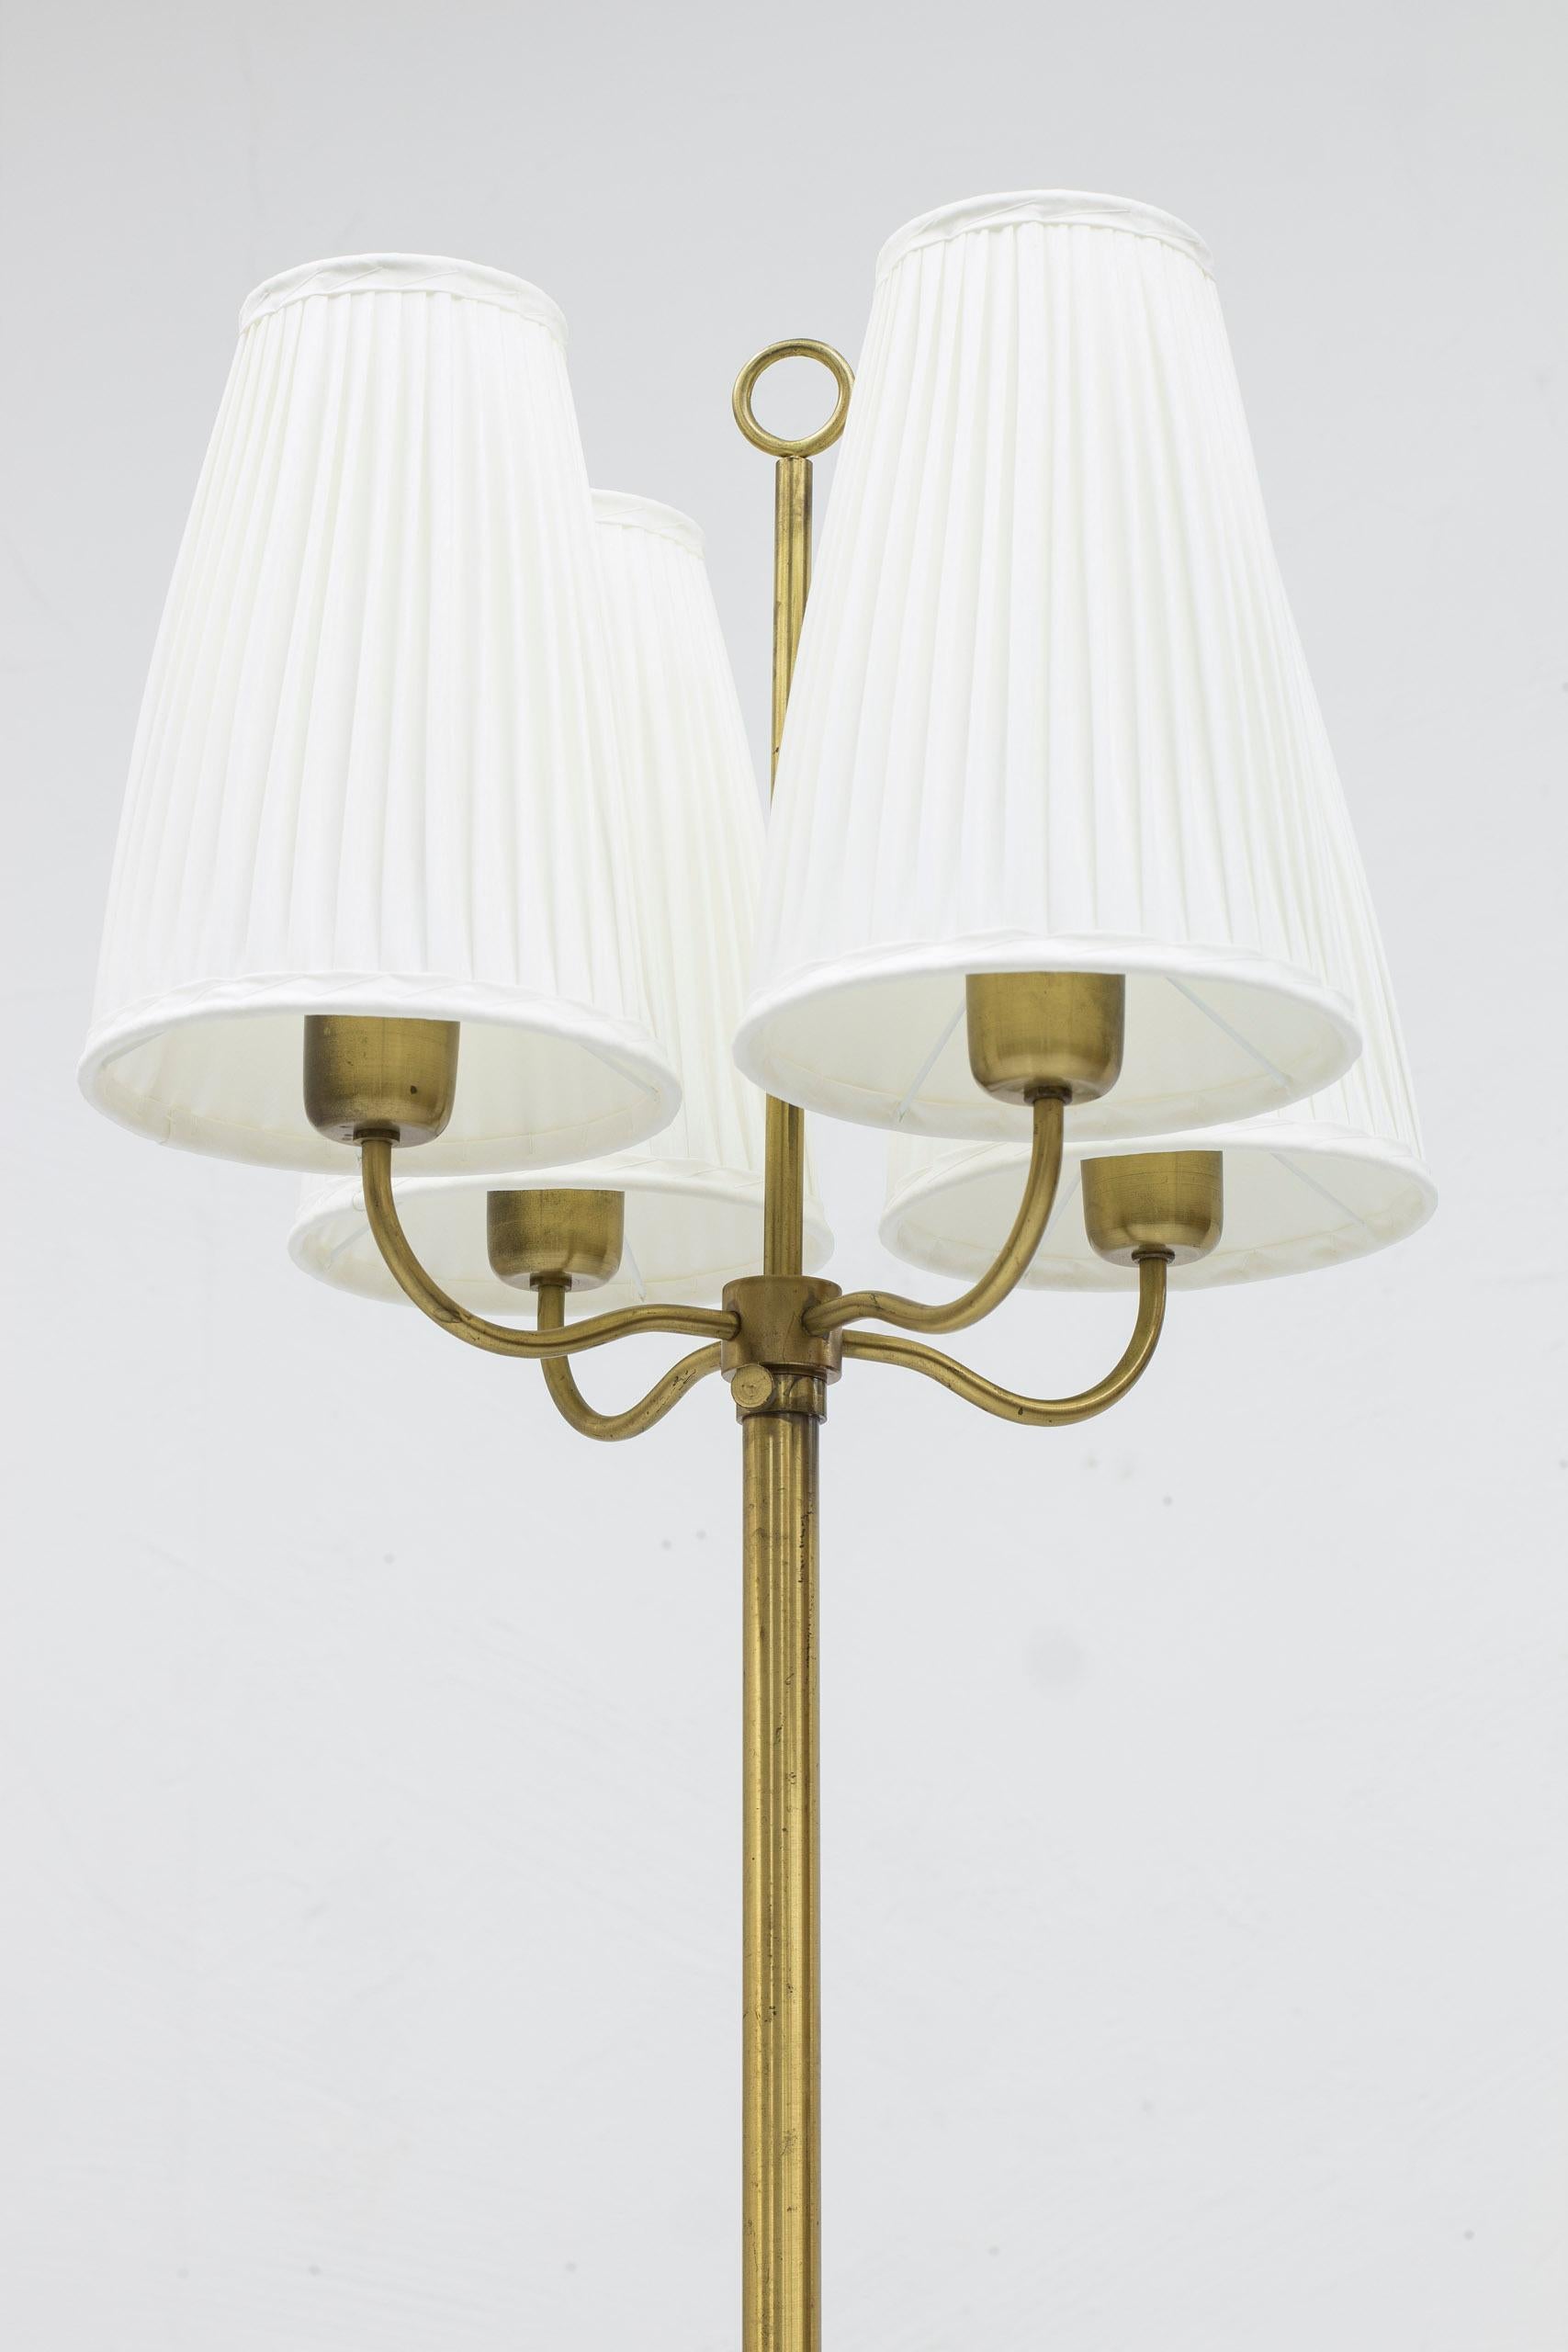 Swedish Modern floor lamp in brass in the manner of Josef Frank, Sweden, 1940s For Sale 4